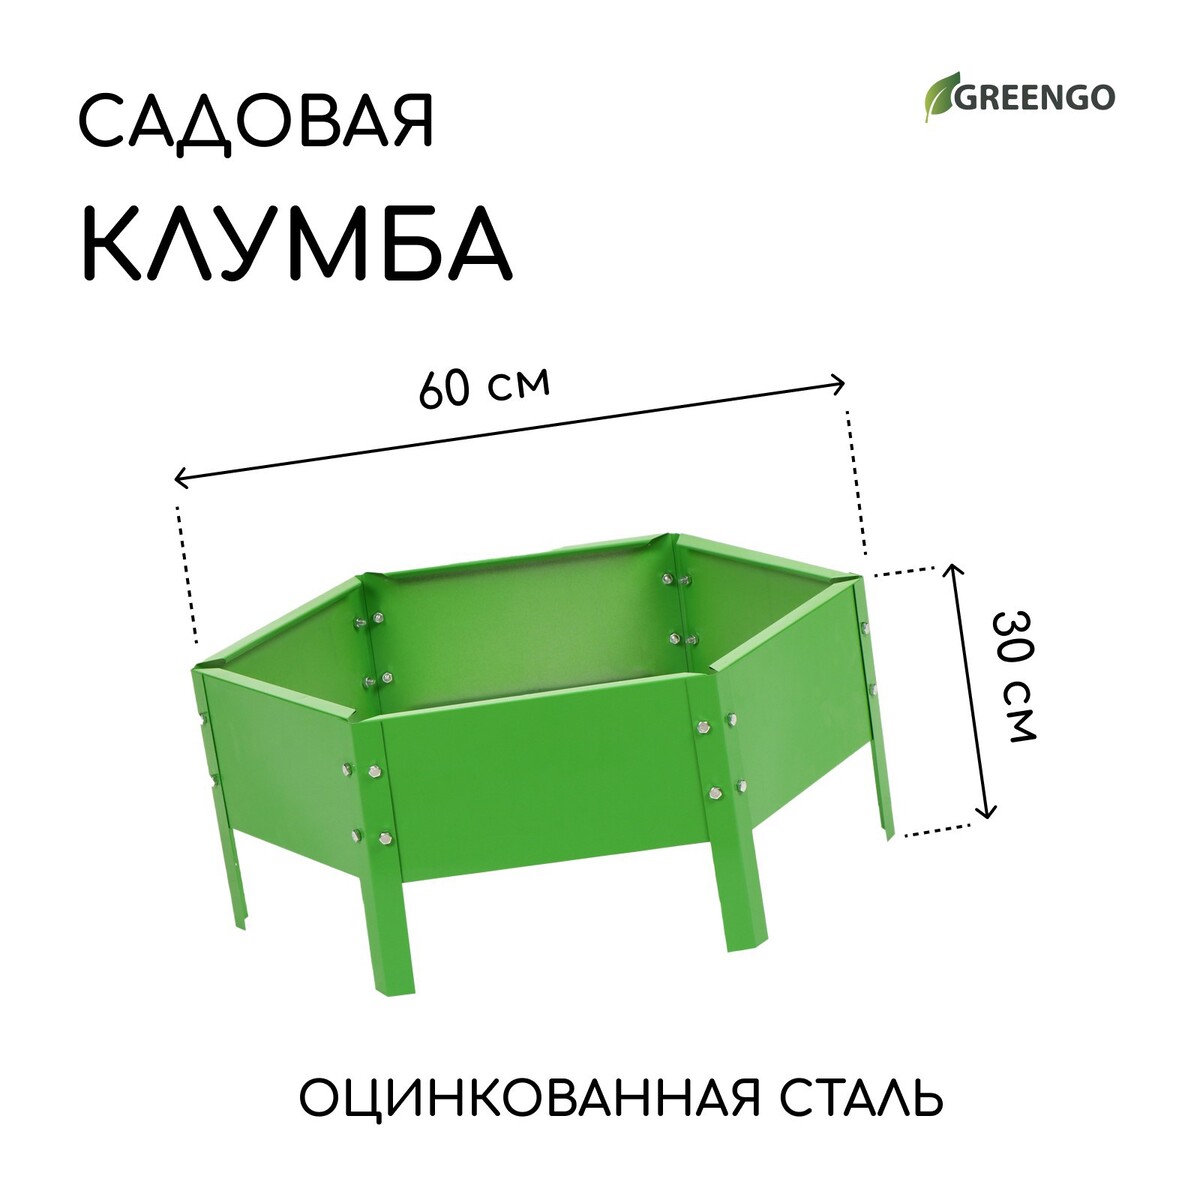 Клумба оцинкованная, d = 60 см, h = 15 см, ярко-зеленая, greengo